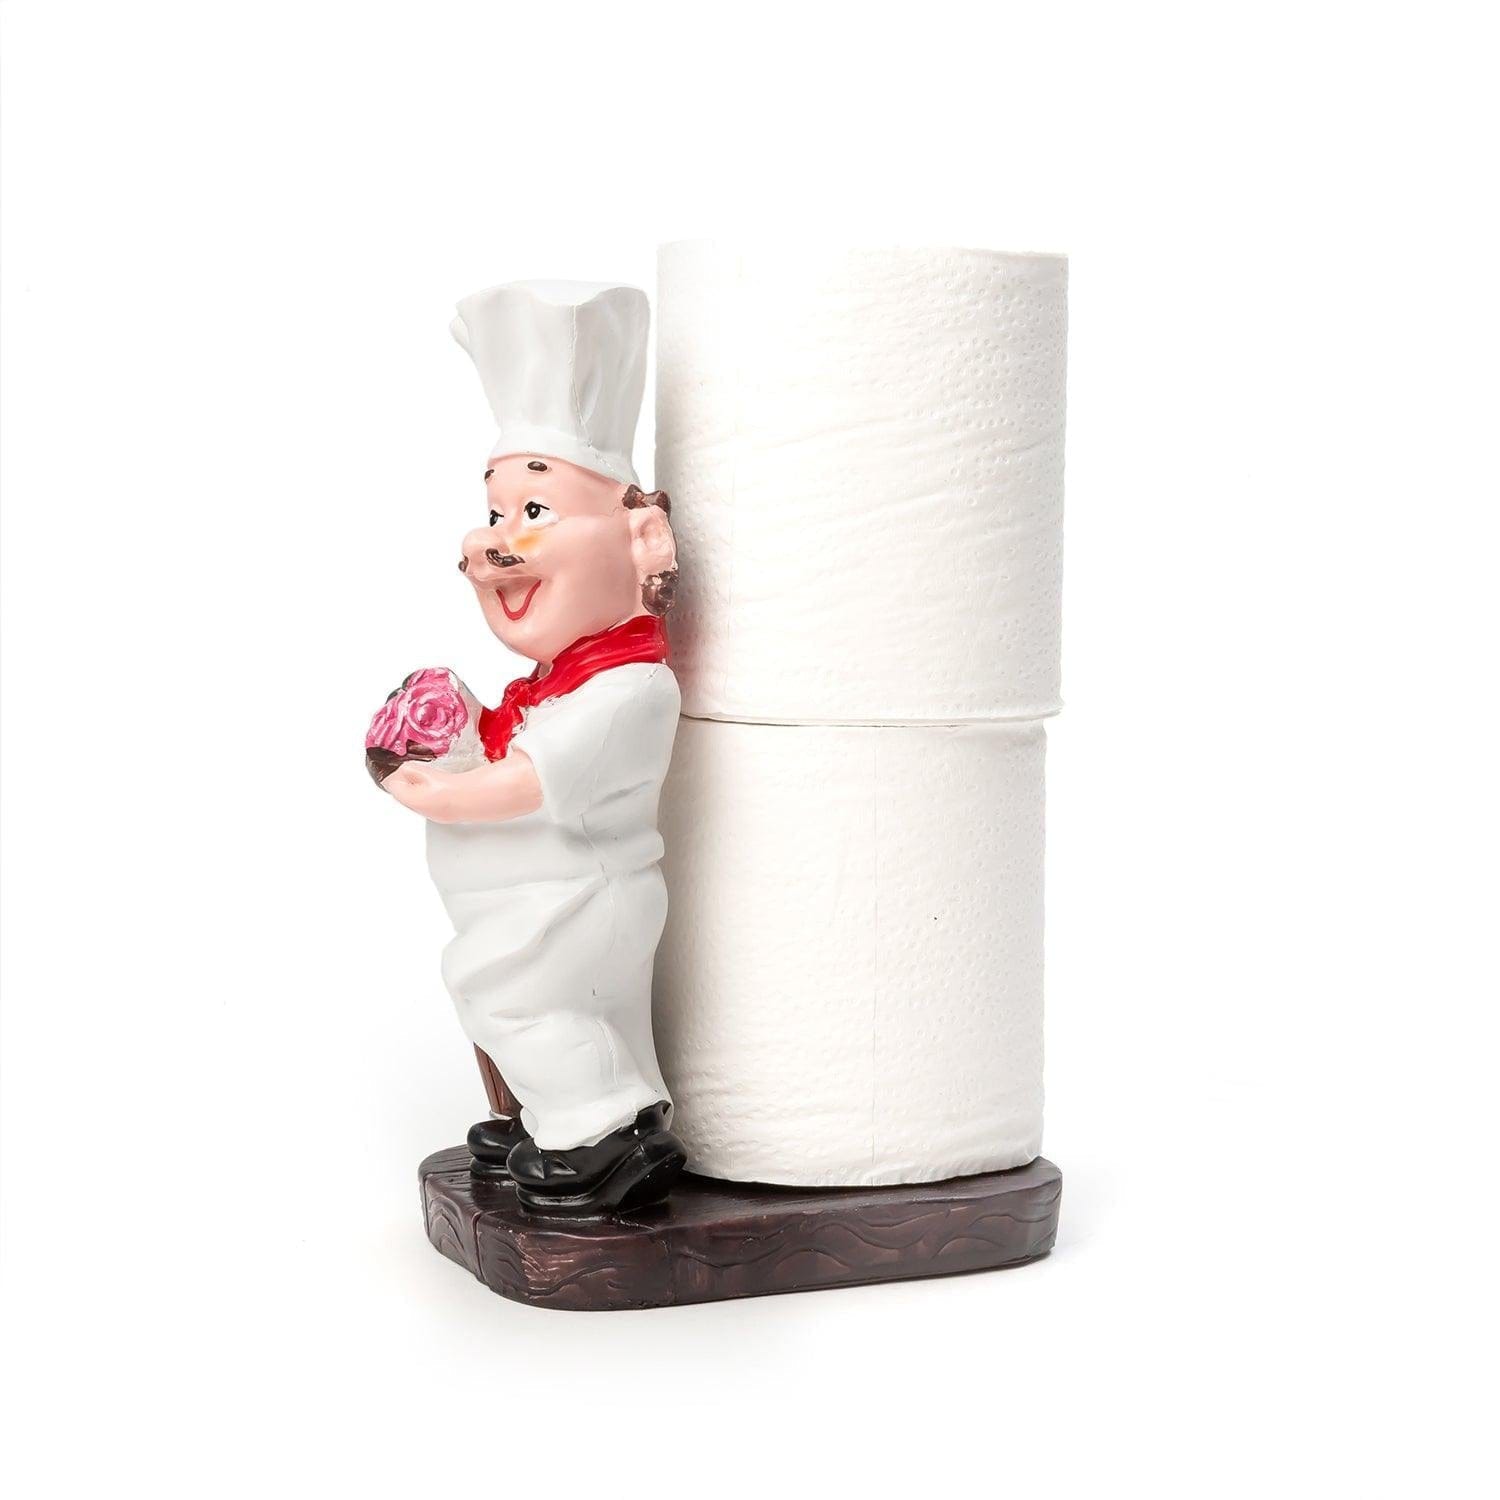 Foodie Chef Figurine Resin Kitchen Tissue Roll Holder with Toothpick Holder (Brown Bucket)